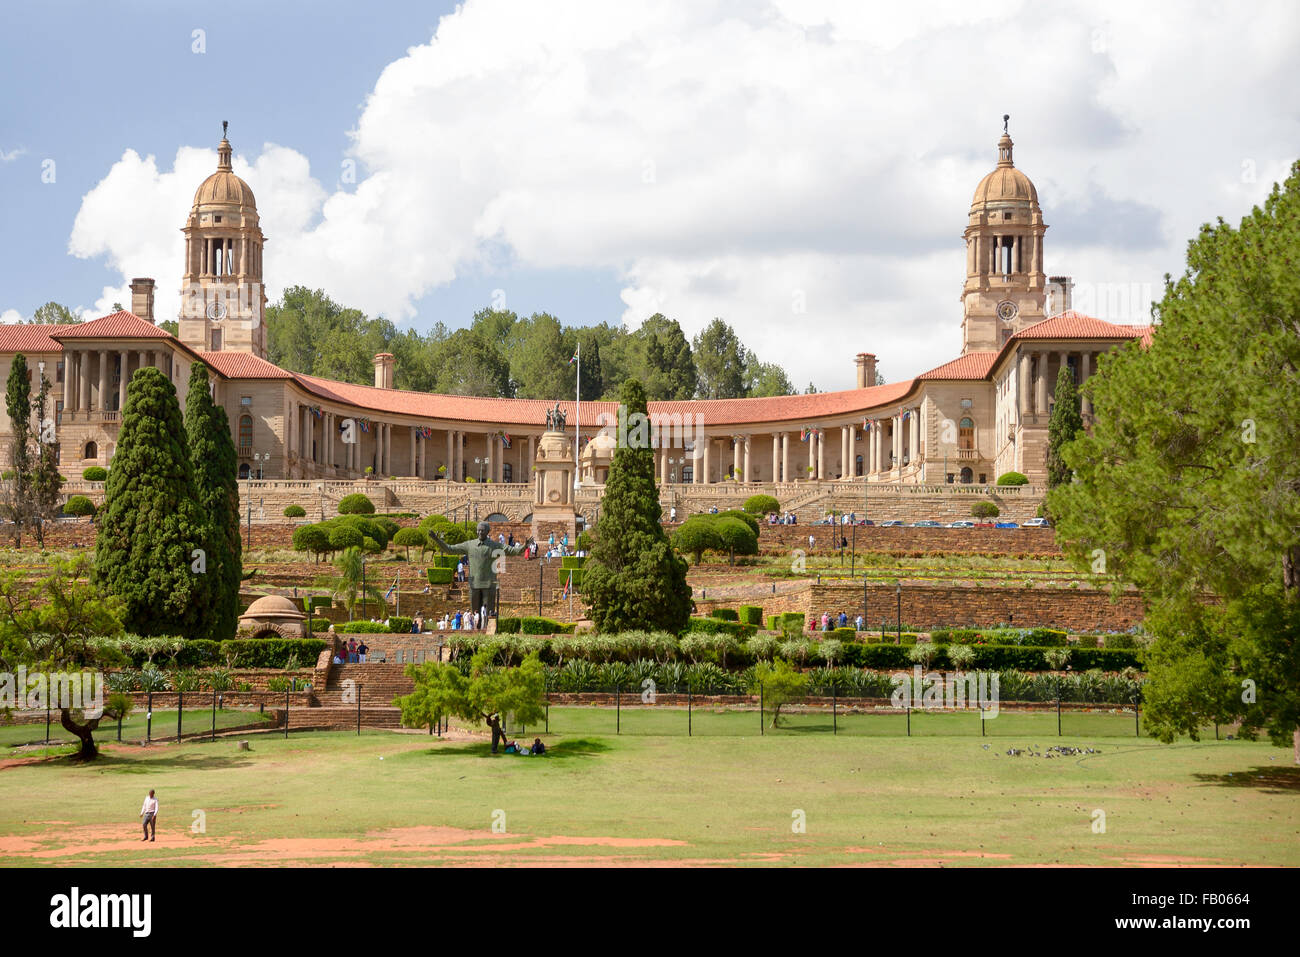 The Union Buildings on Meintjieskop, Pretoria, City of Tshwane Municipality, Gauteng Province, Republic of South Africa Stock Photo